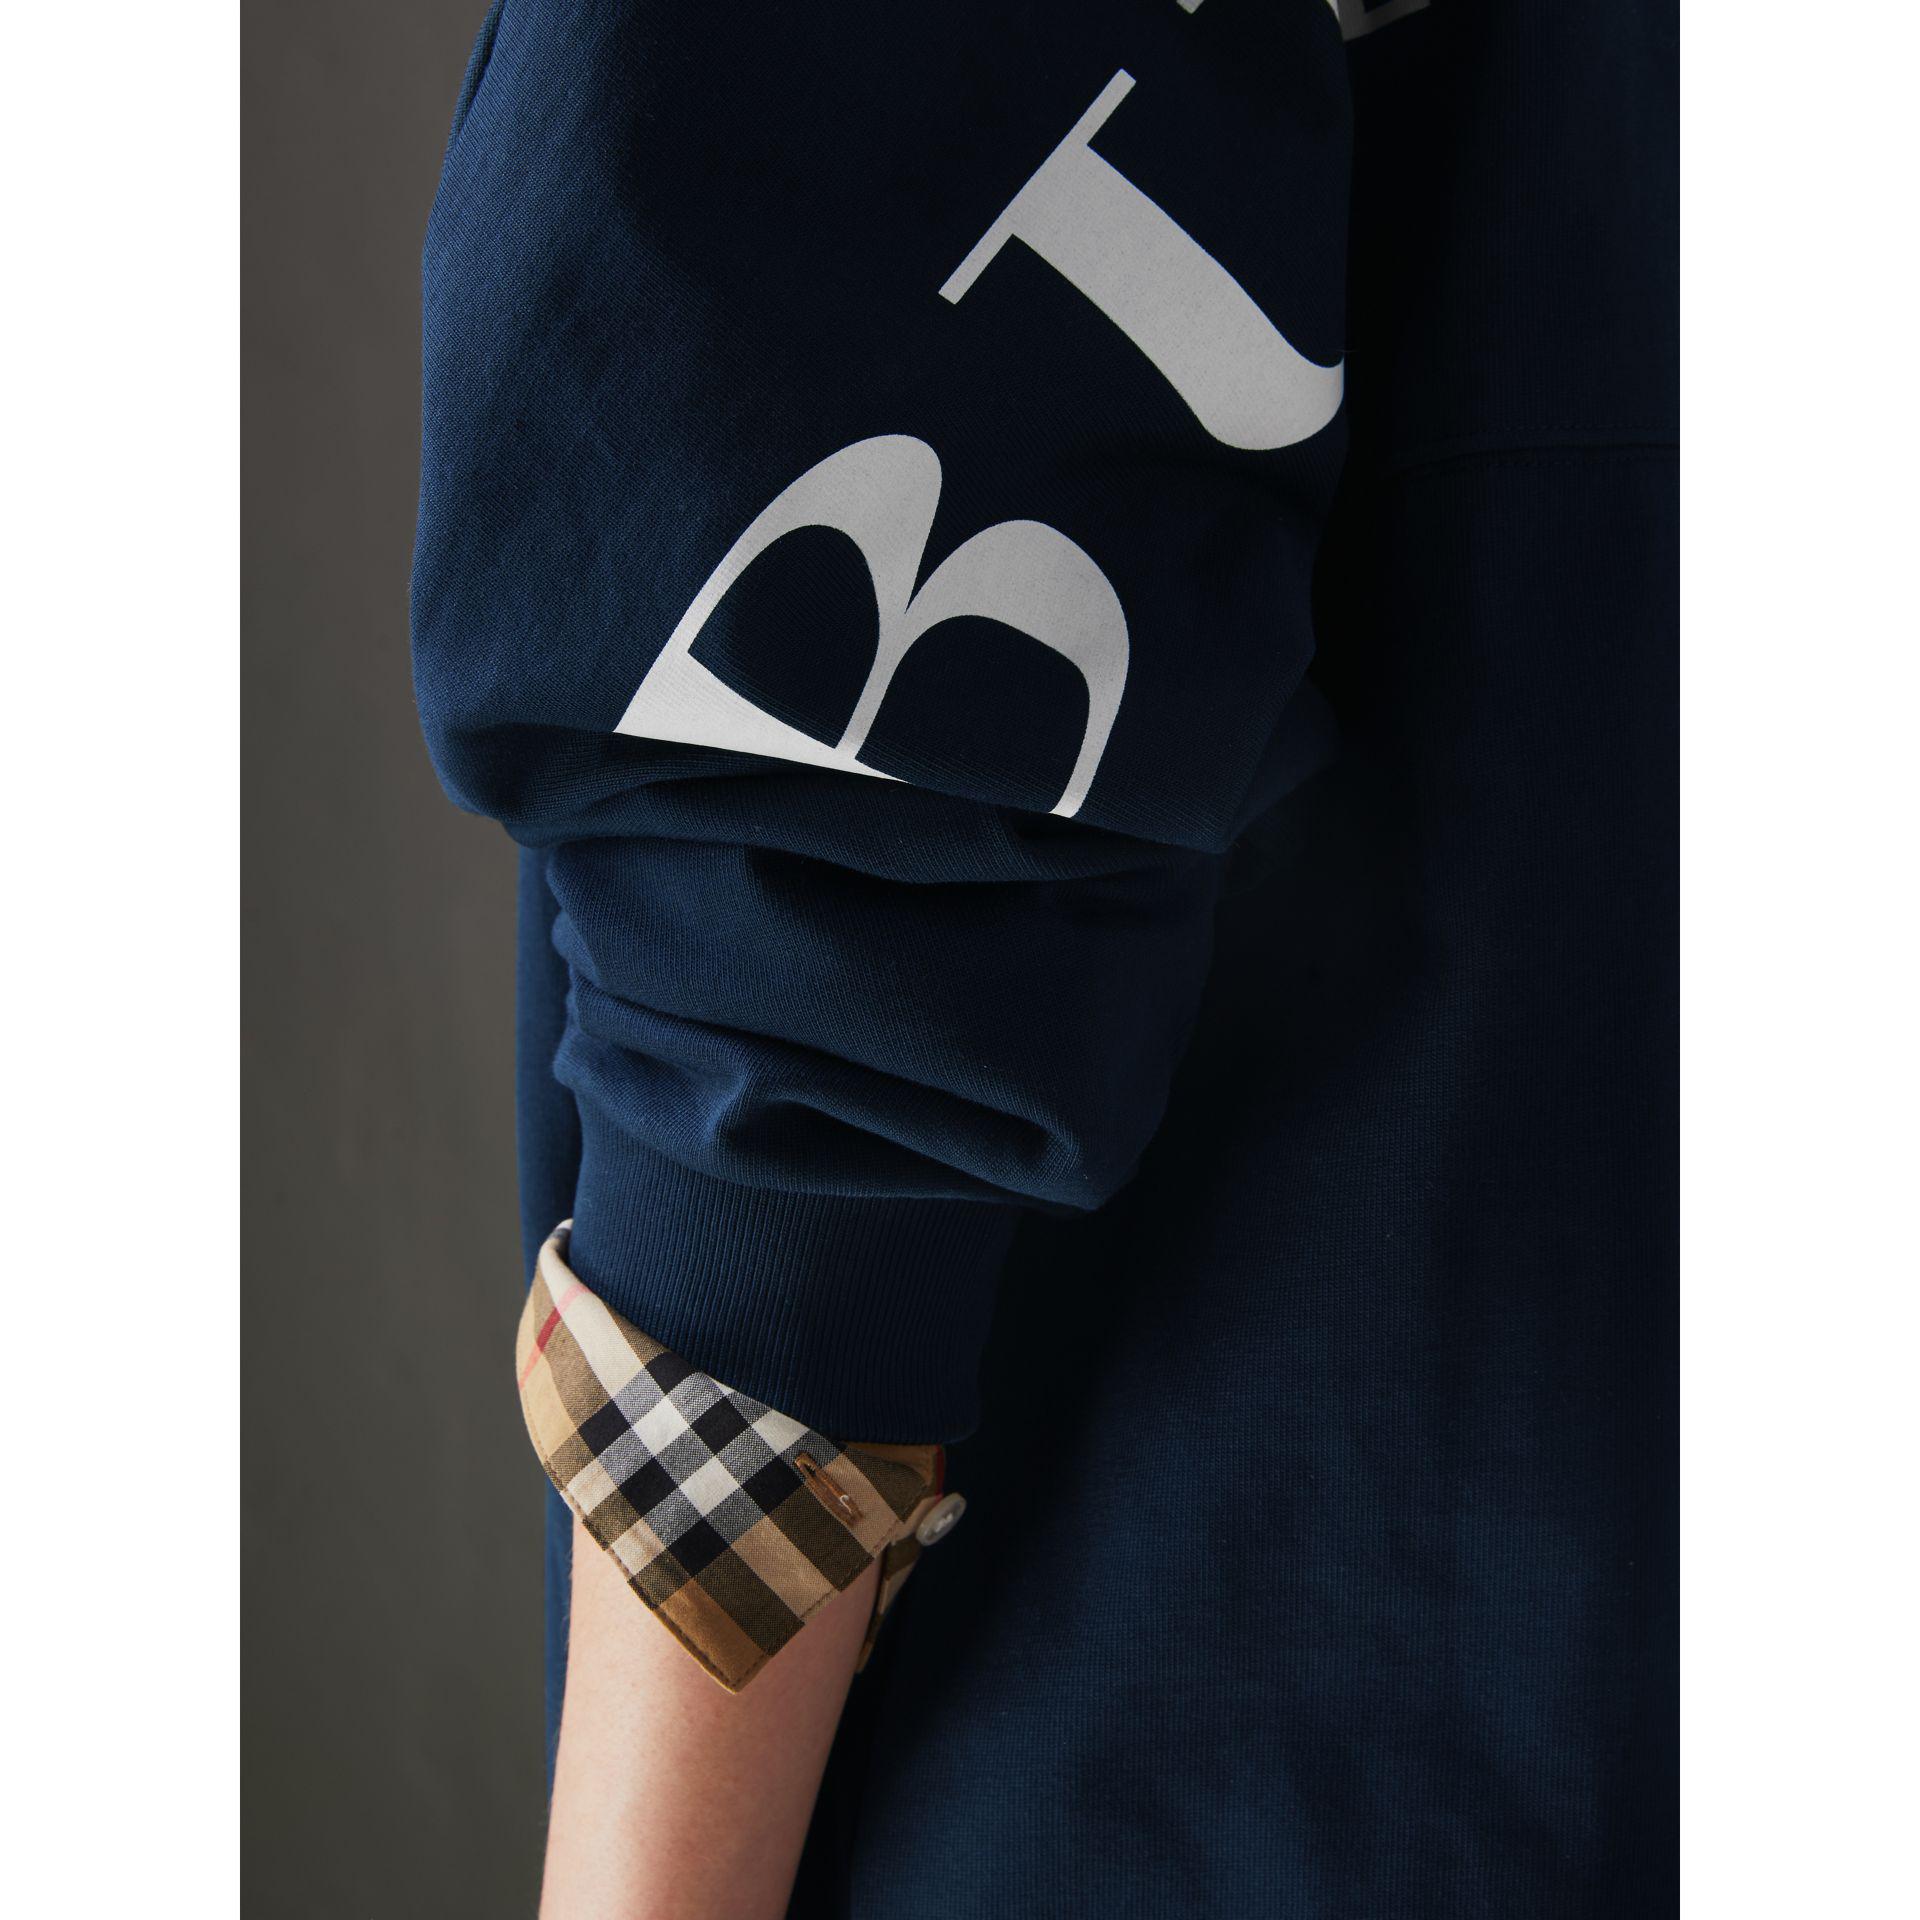 burberry logo print cotton oversized sweatshirt